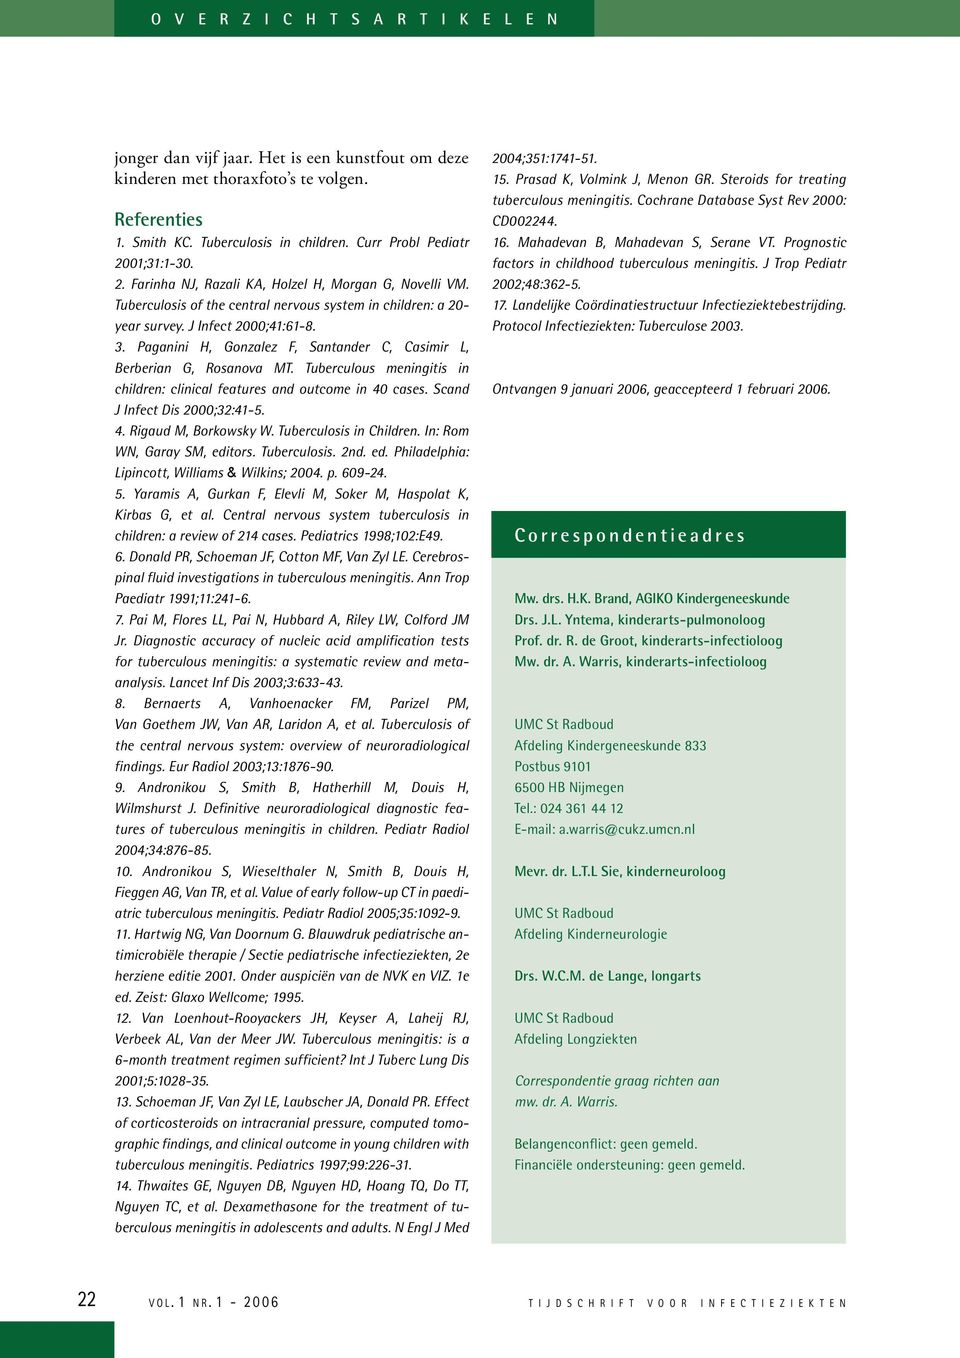 Paganini H, Gonzalez F, Santander C, Casimir L, Berberian G, Rosanova MT. Tuberculous meningitis in children: clinical features and outcome in 40 cases. Scand J Infect Dis 2000;32:41-5. 4. Rigaud M, Borkowsky W.